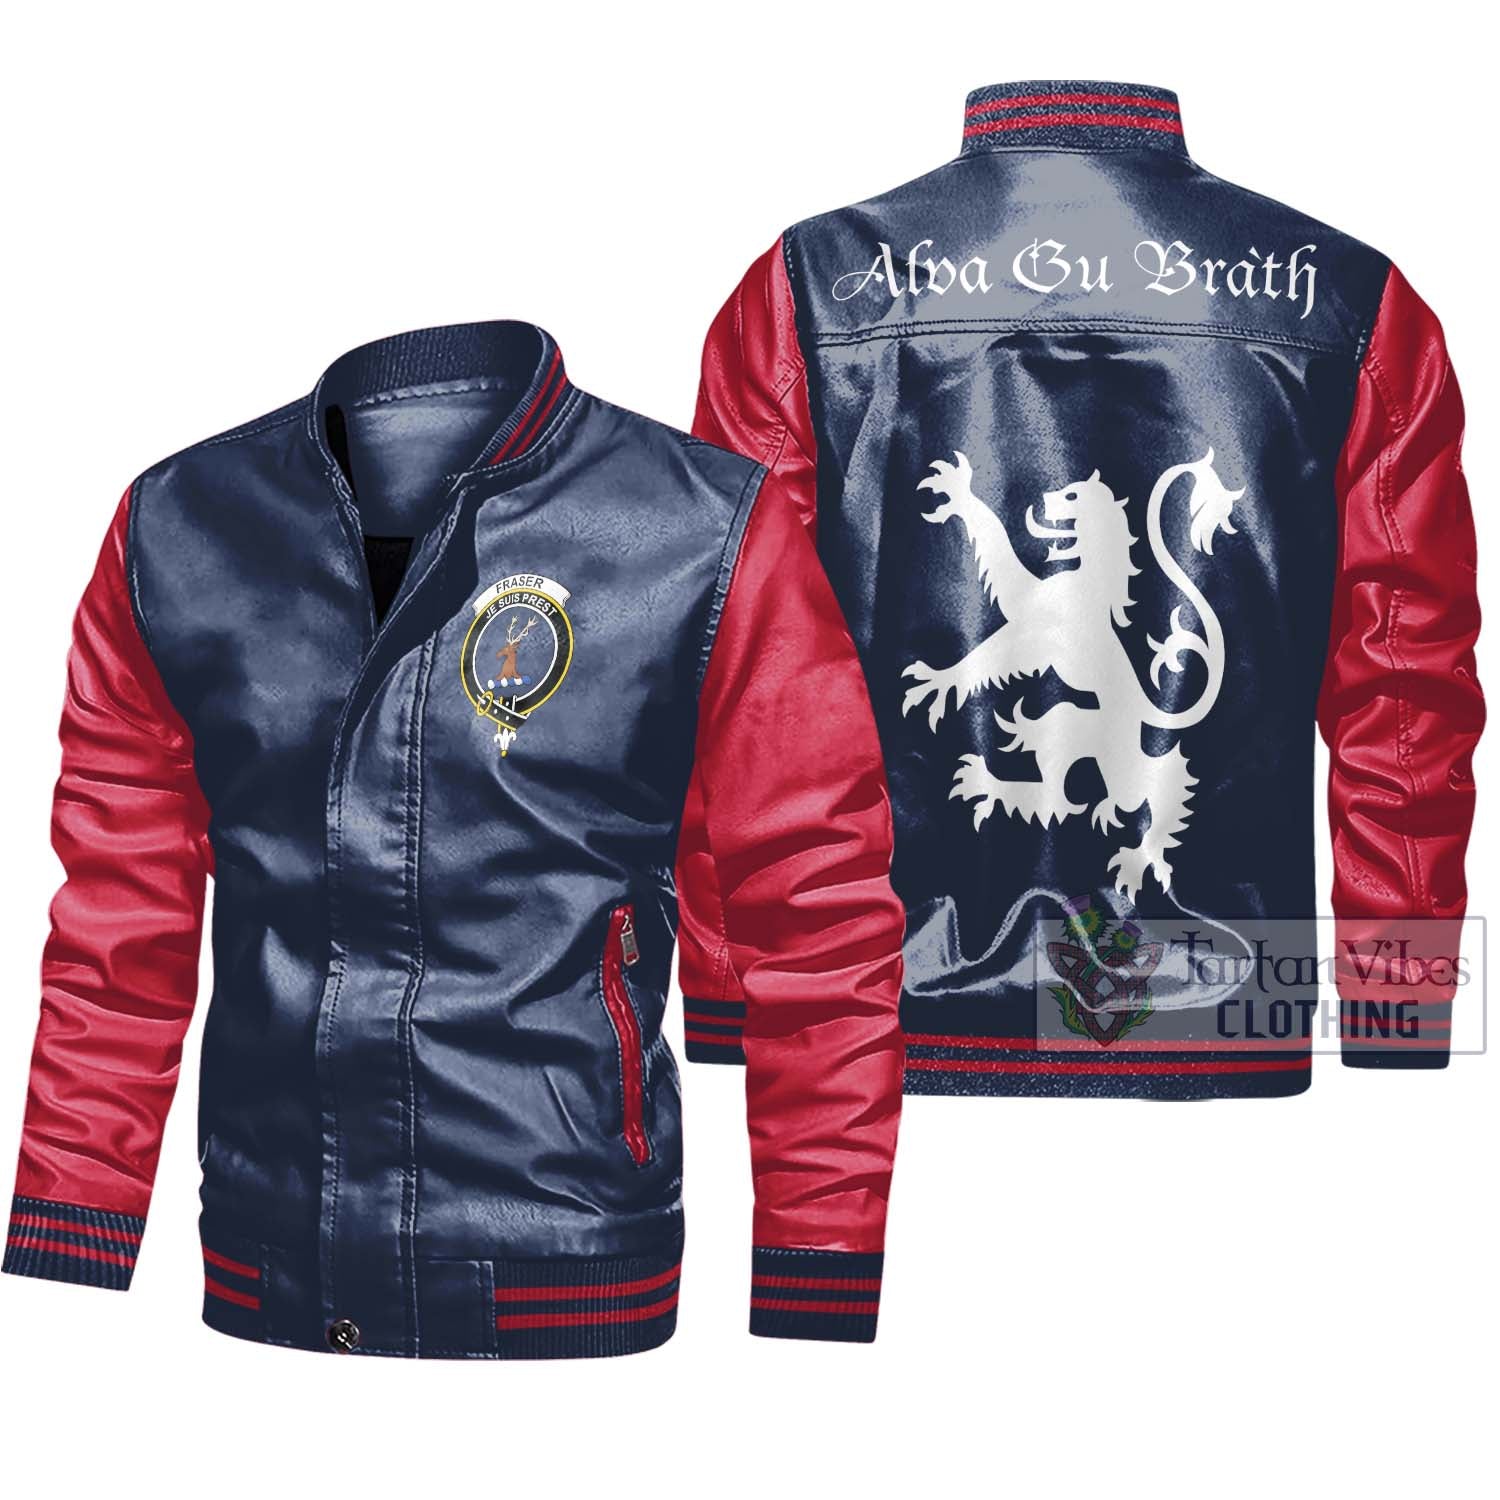 Tartan Vibes Clothing Fraser of Lovat Family Crest Leather Bomber Jacket Lion Rampant Alba Gu Brath Style